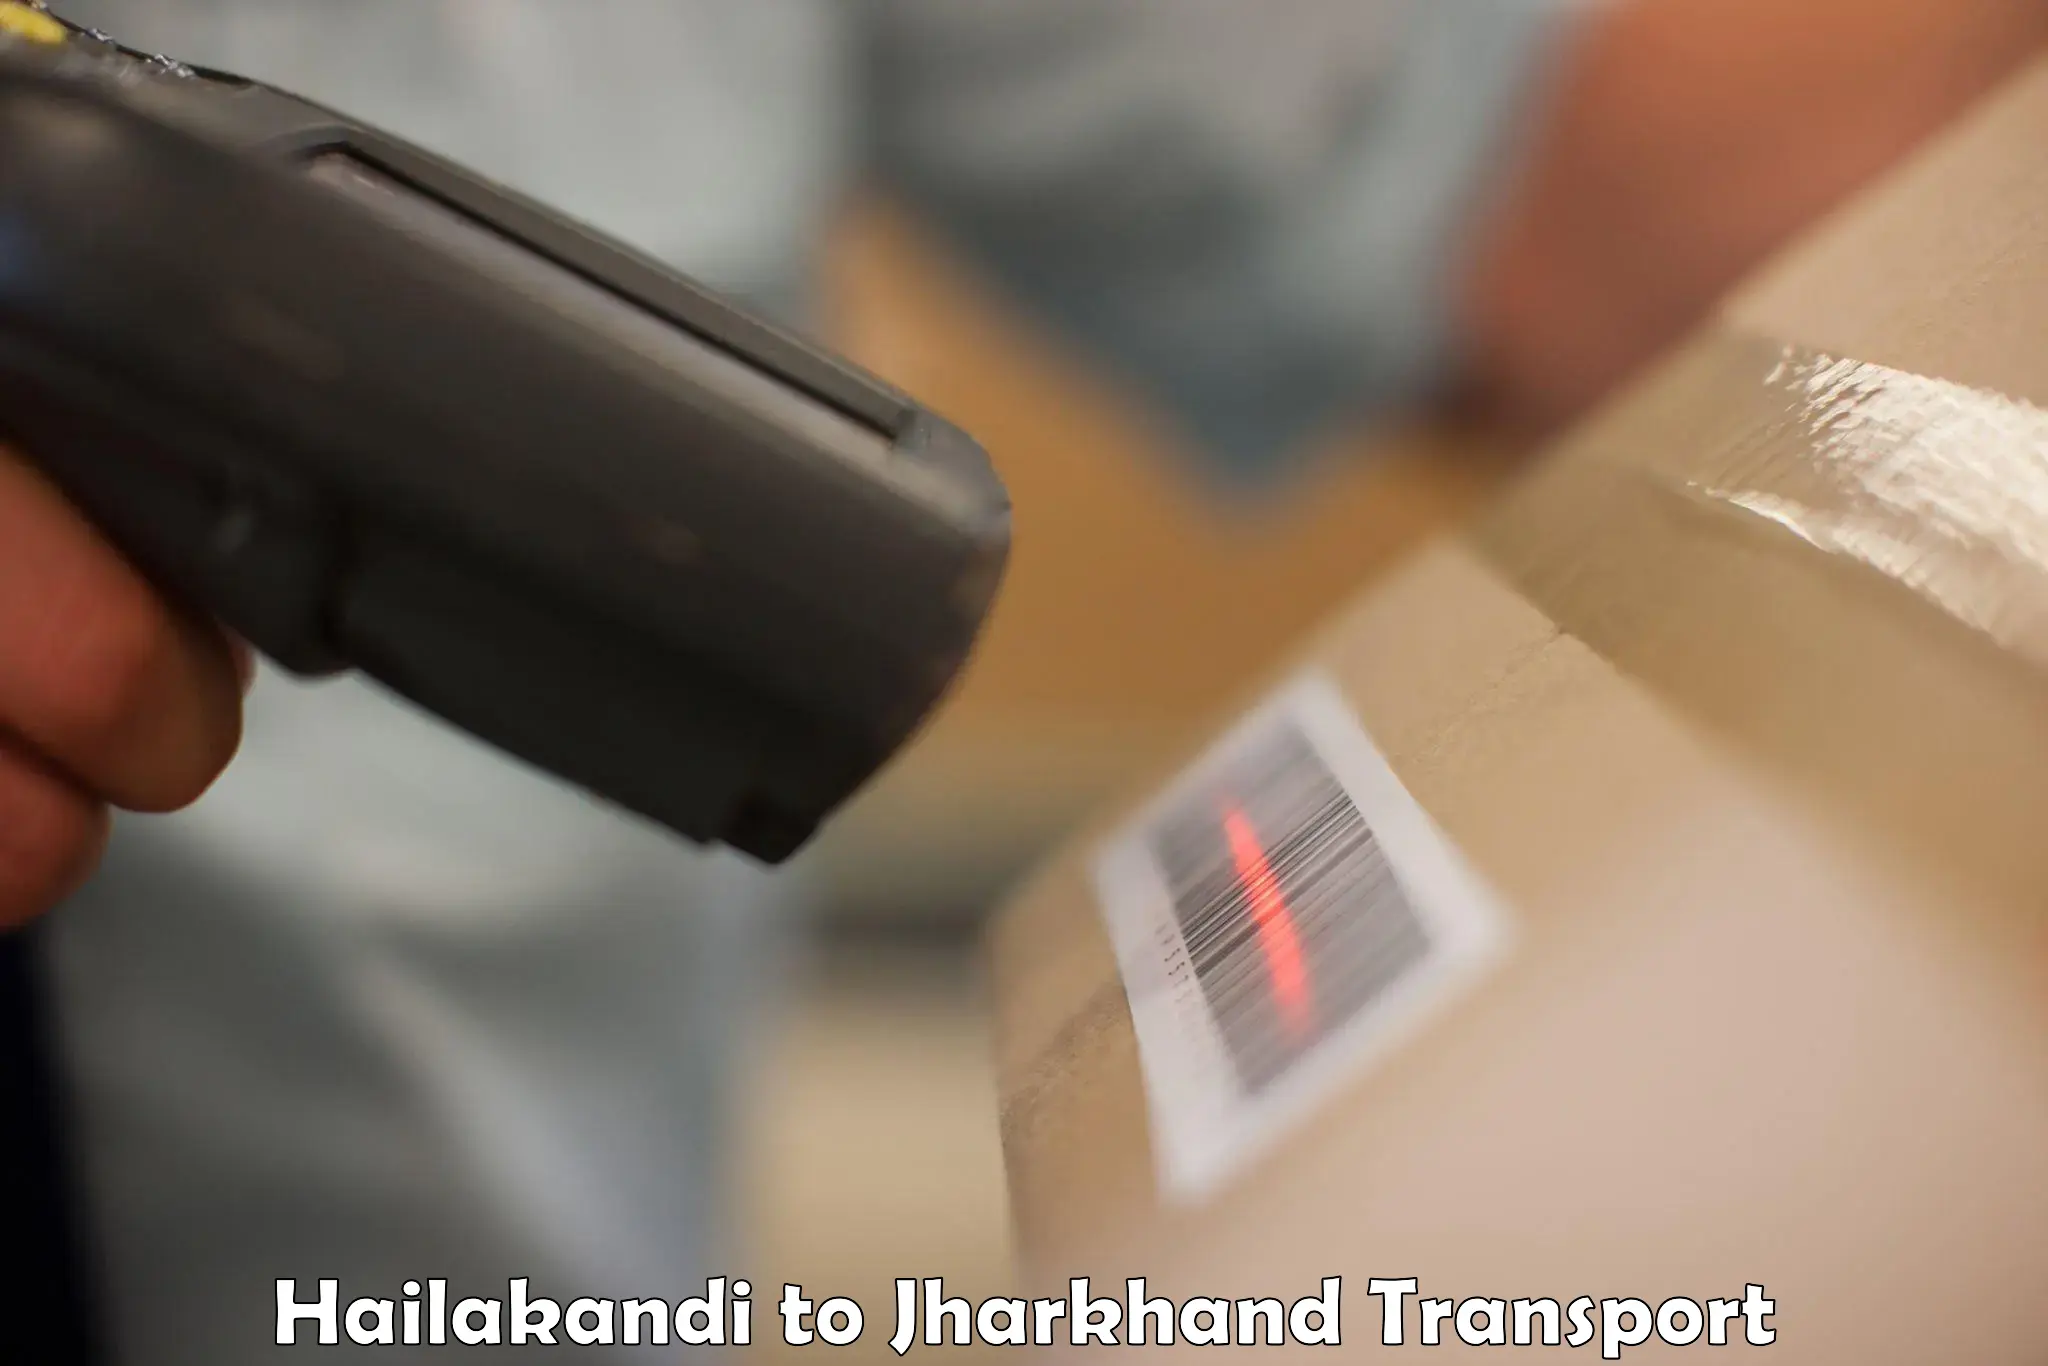 Furniture transport service Hailakandi to Giridih